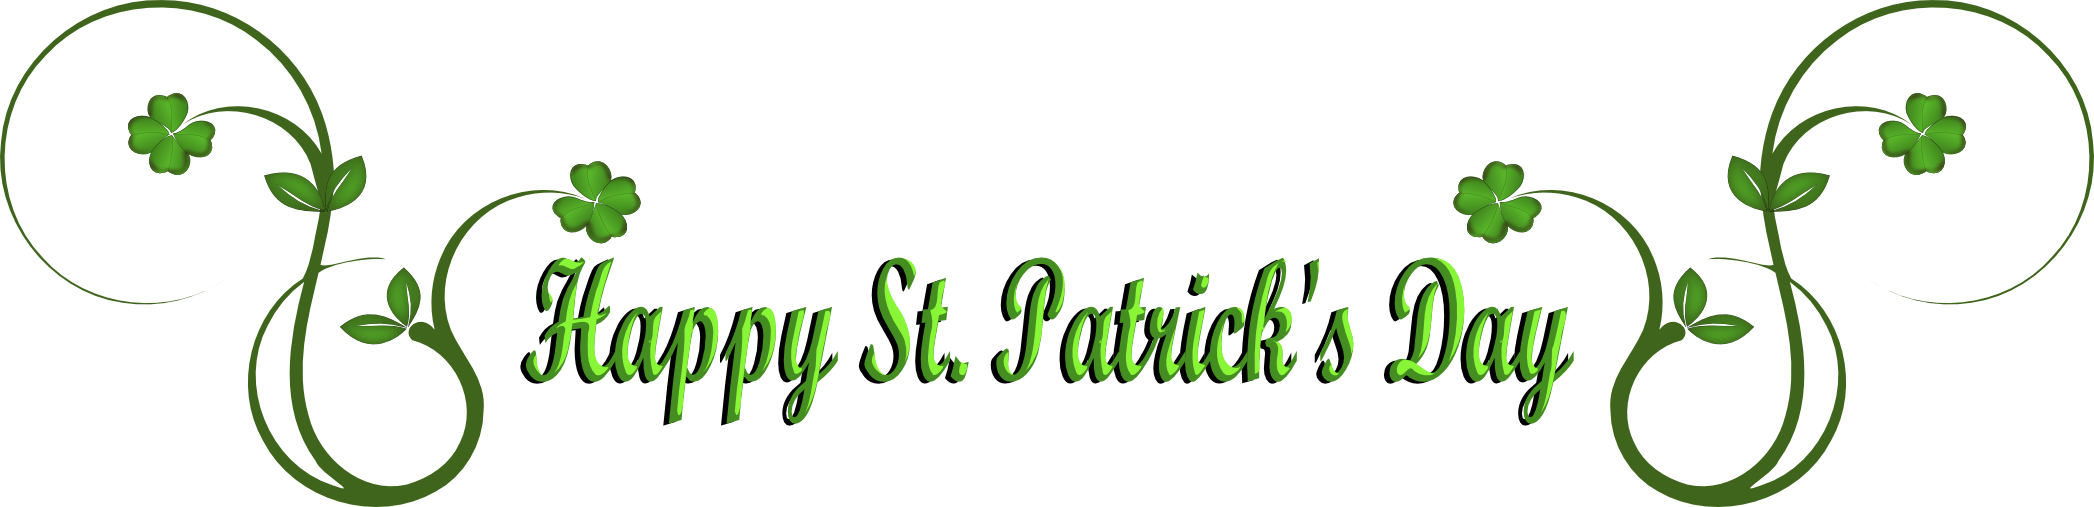 St patricks day celebrating my irish heritage with st patrick clip art